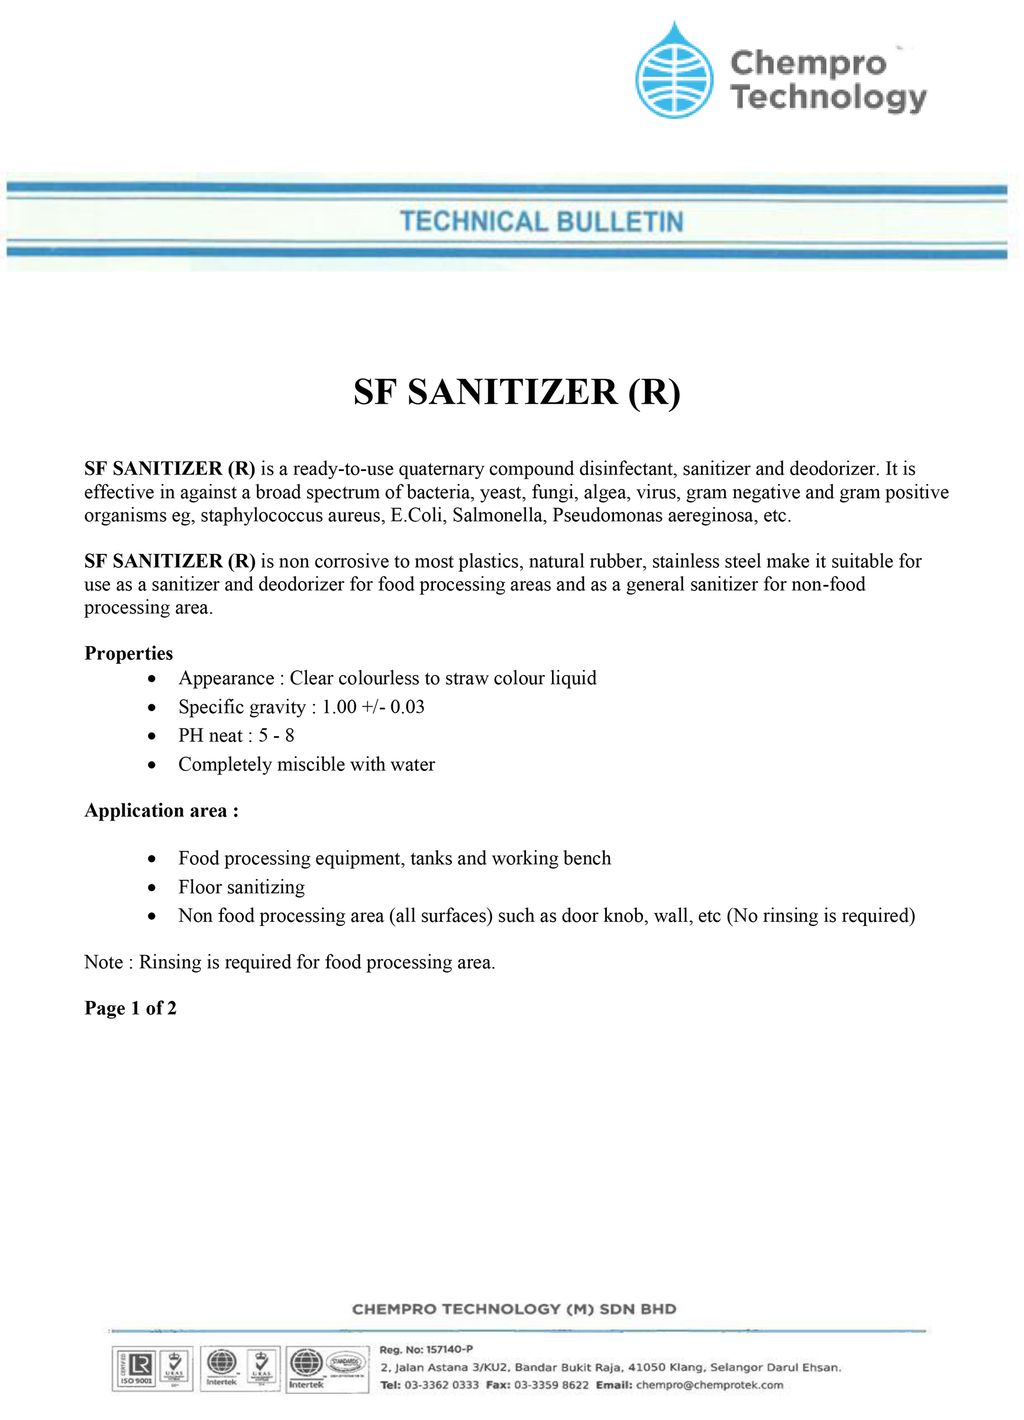 sf sanitizer (R) - technical Bulletin -1.jpg